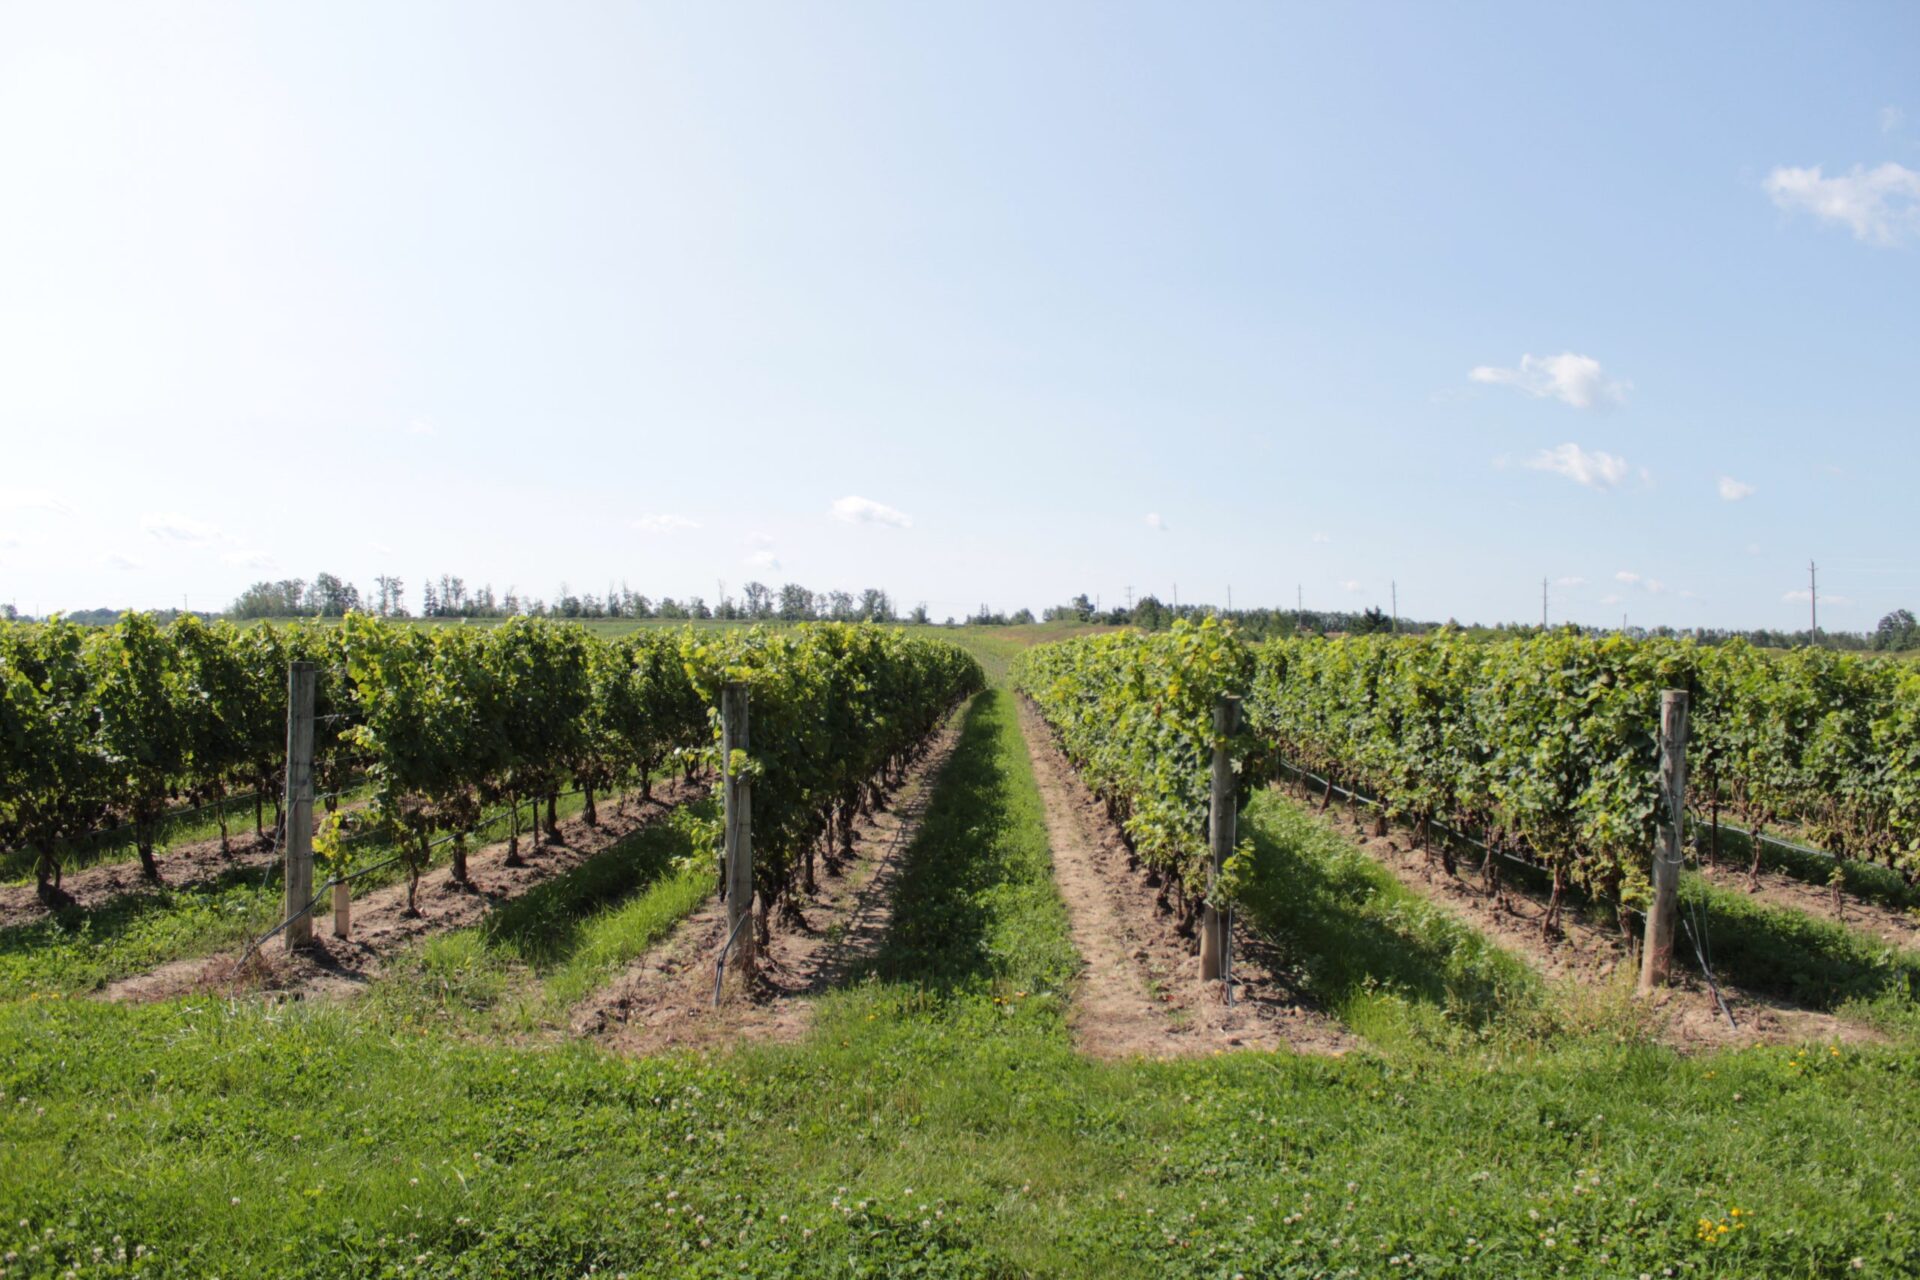 Vineyard in Vineland Quarry, Lincoln, Ontario image